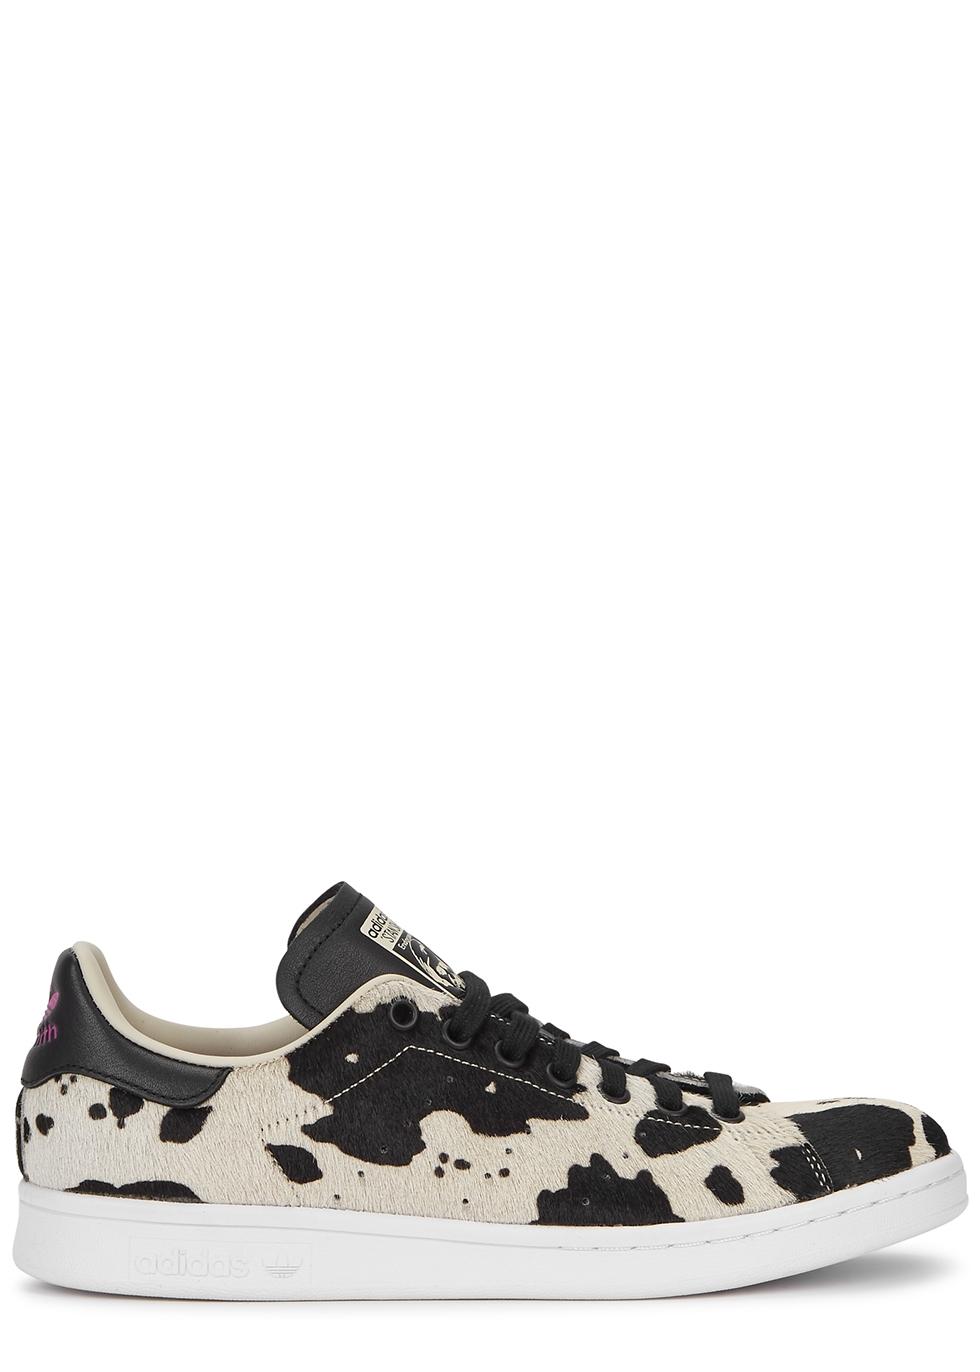 adidas Originals Stan Smith Cow-print Calf Hair Sneakers in Black | Lyst